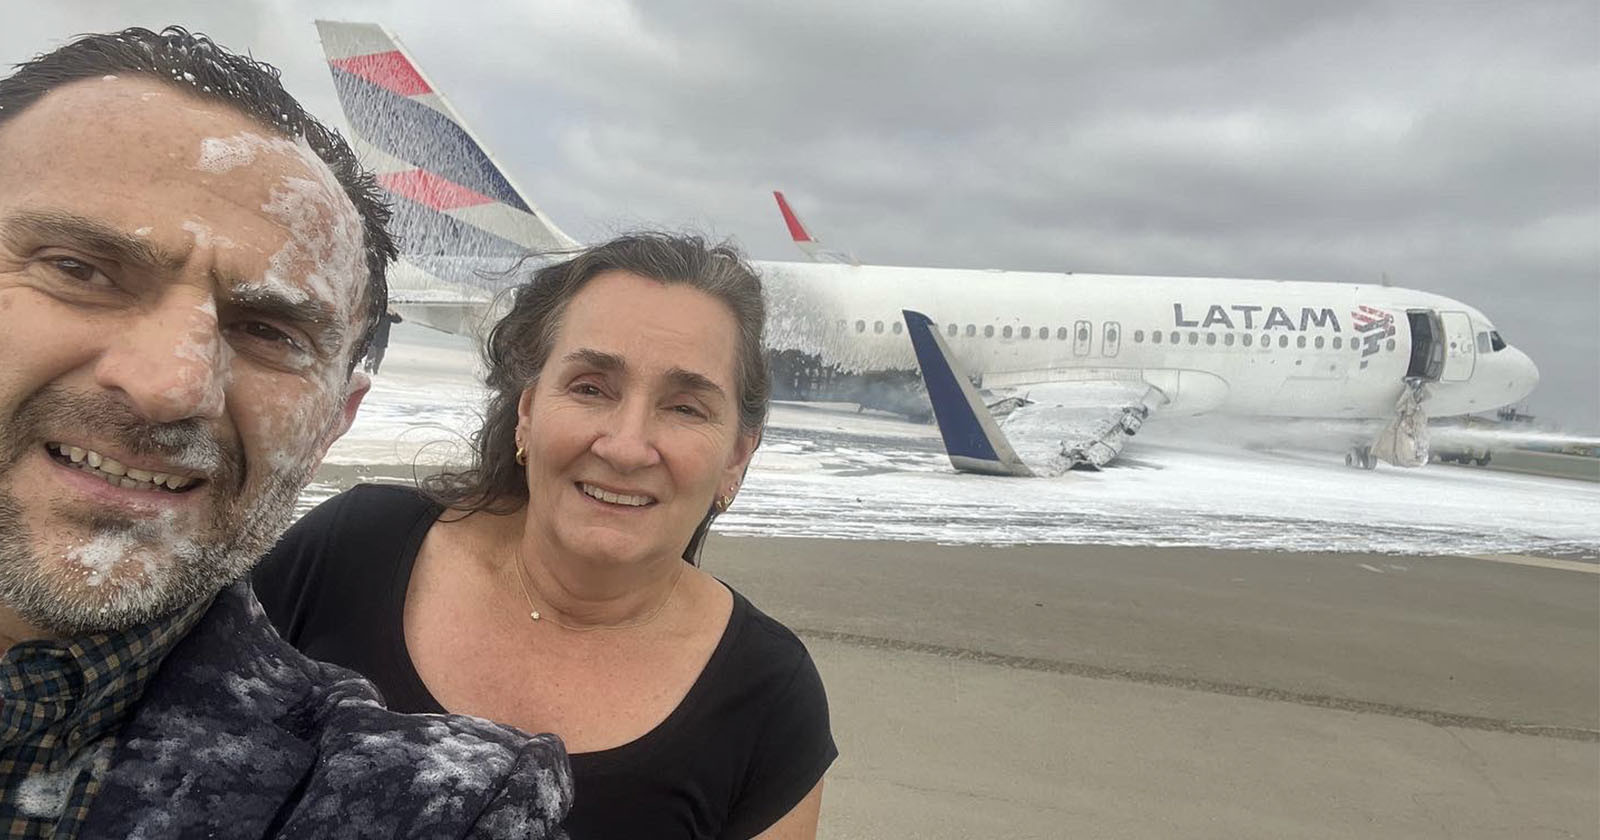  couple take selfie just after surviving plane crash 